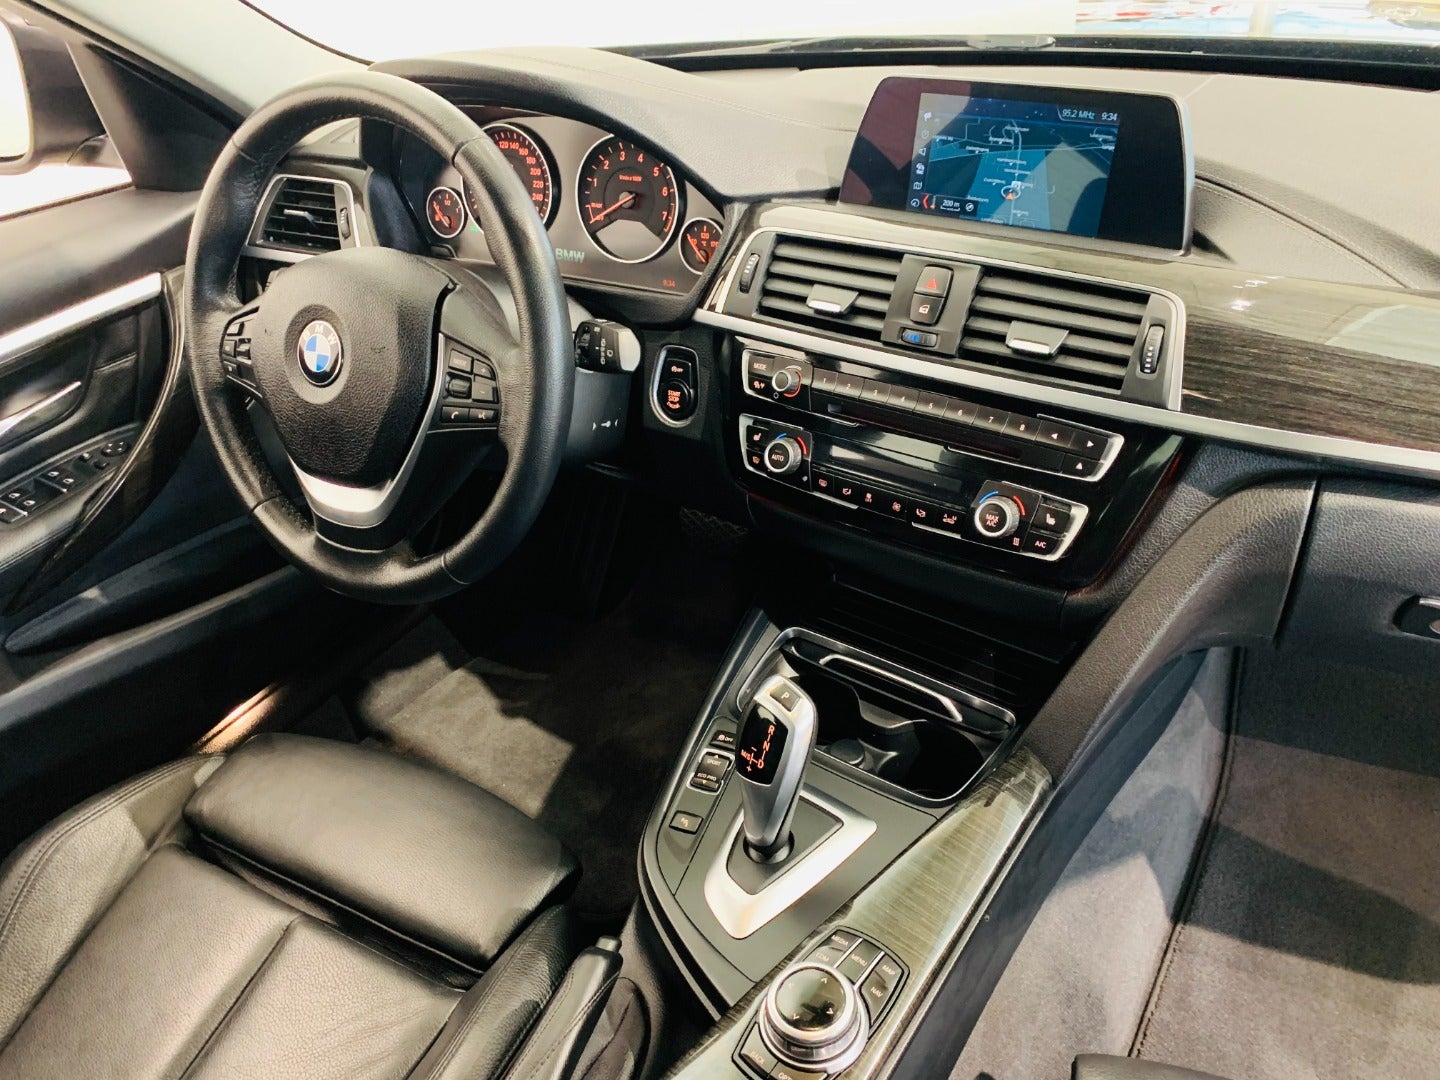 BMW 320i 2,0 Touring aut.,  5-dørs